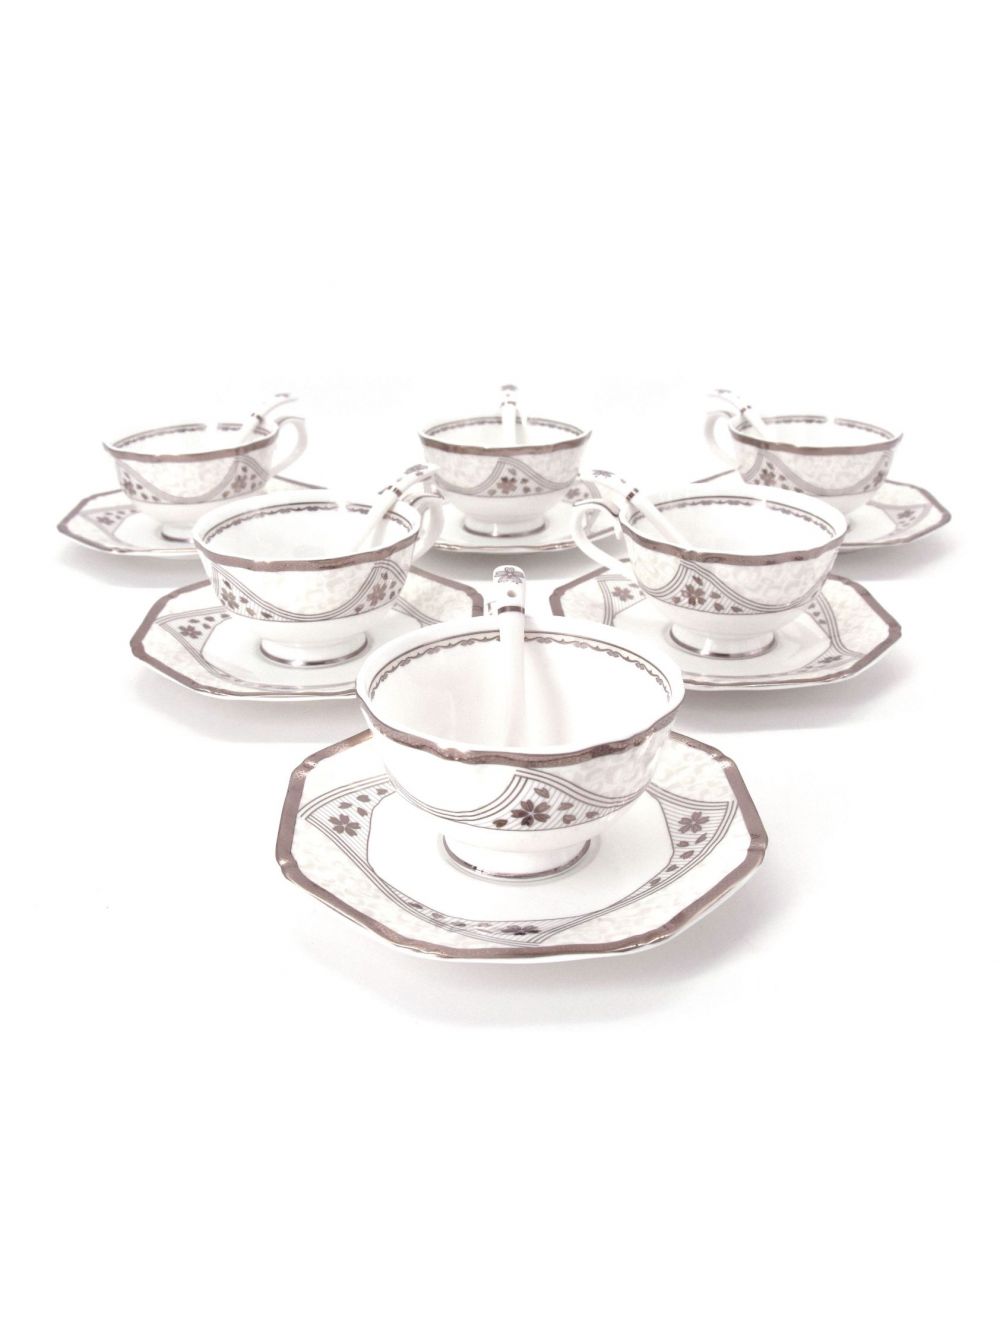 Tea Cup, Saucer and Spoon 18 Pieces Set